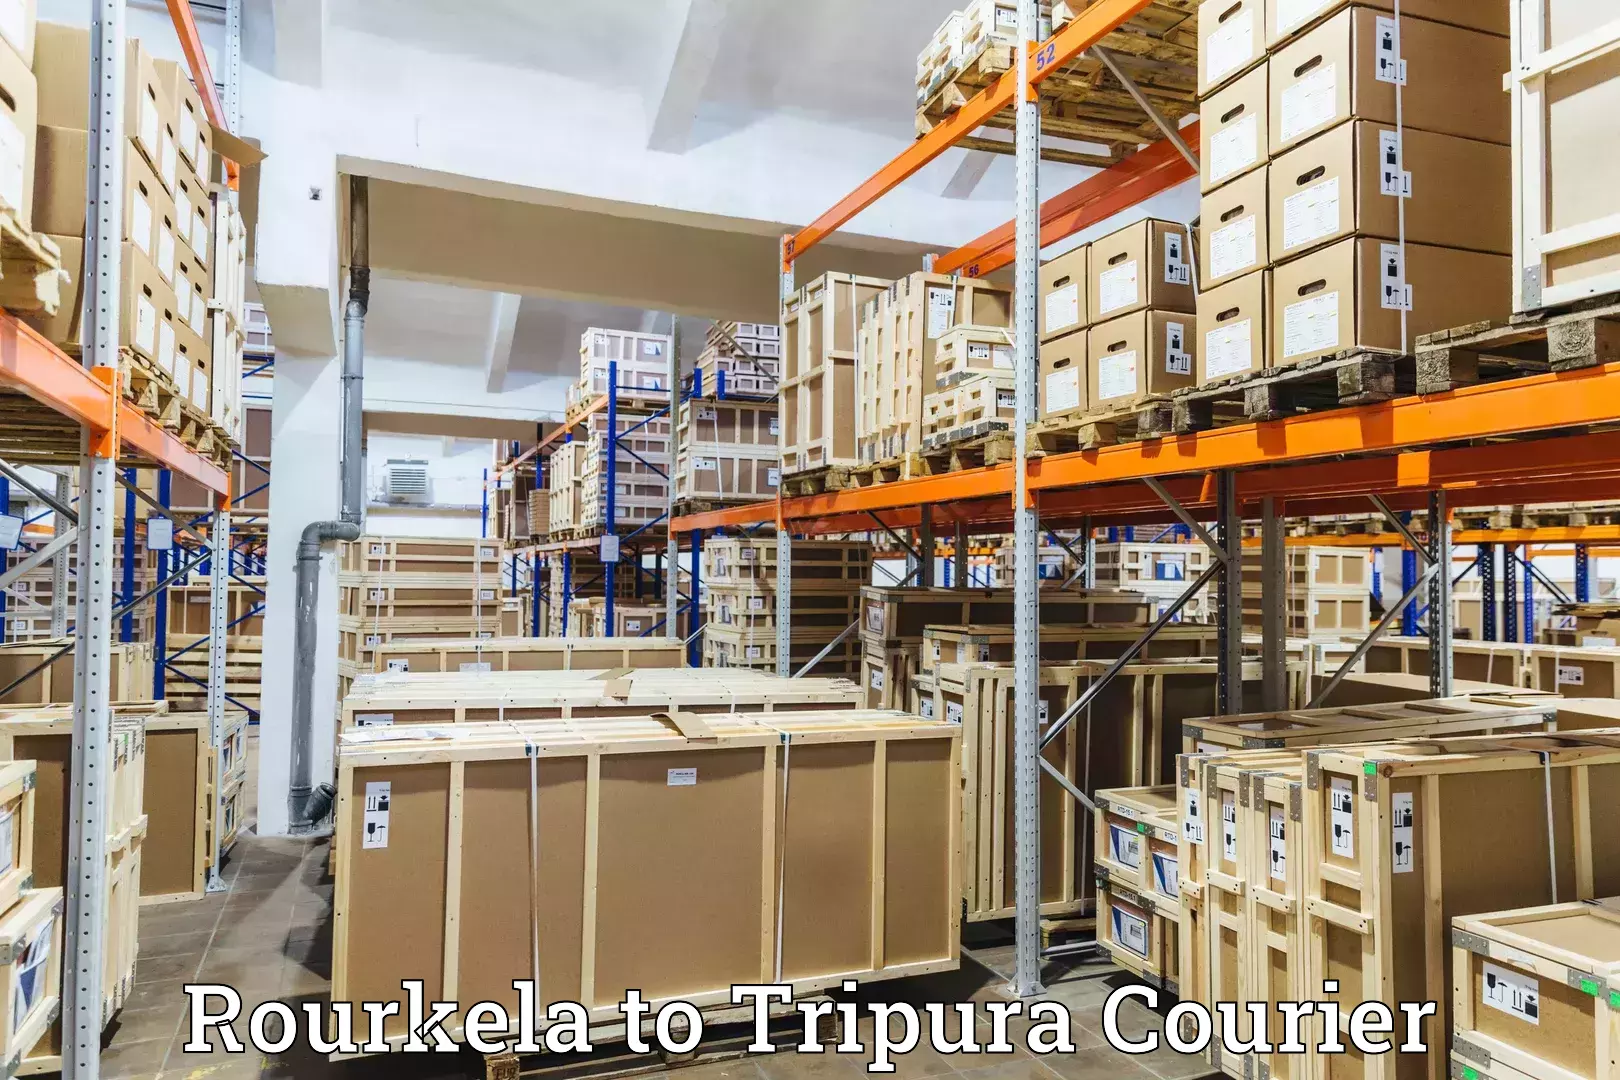 Tracking updates Rourkela to Agartala